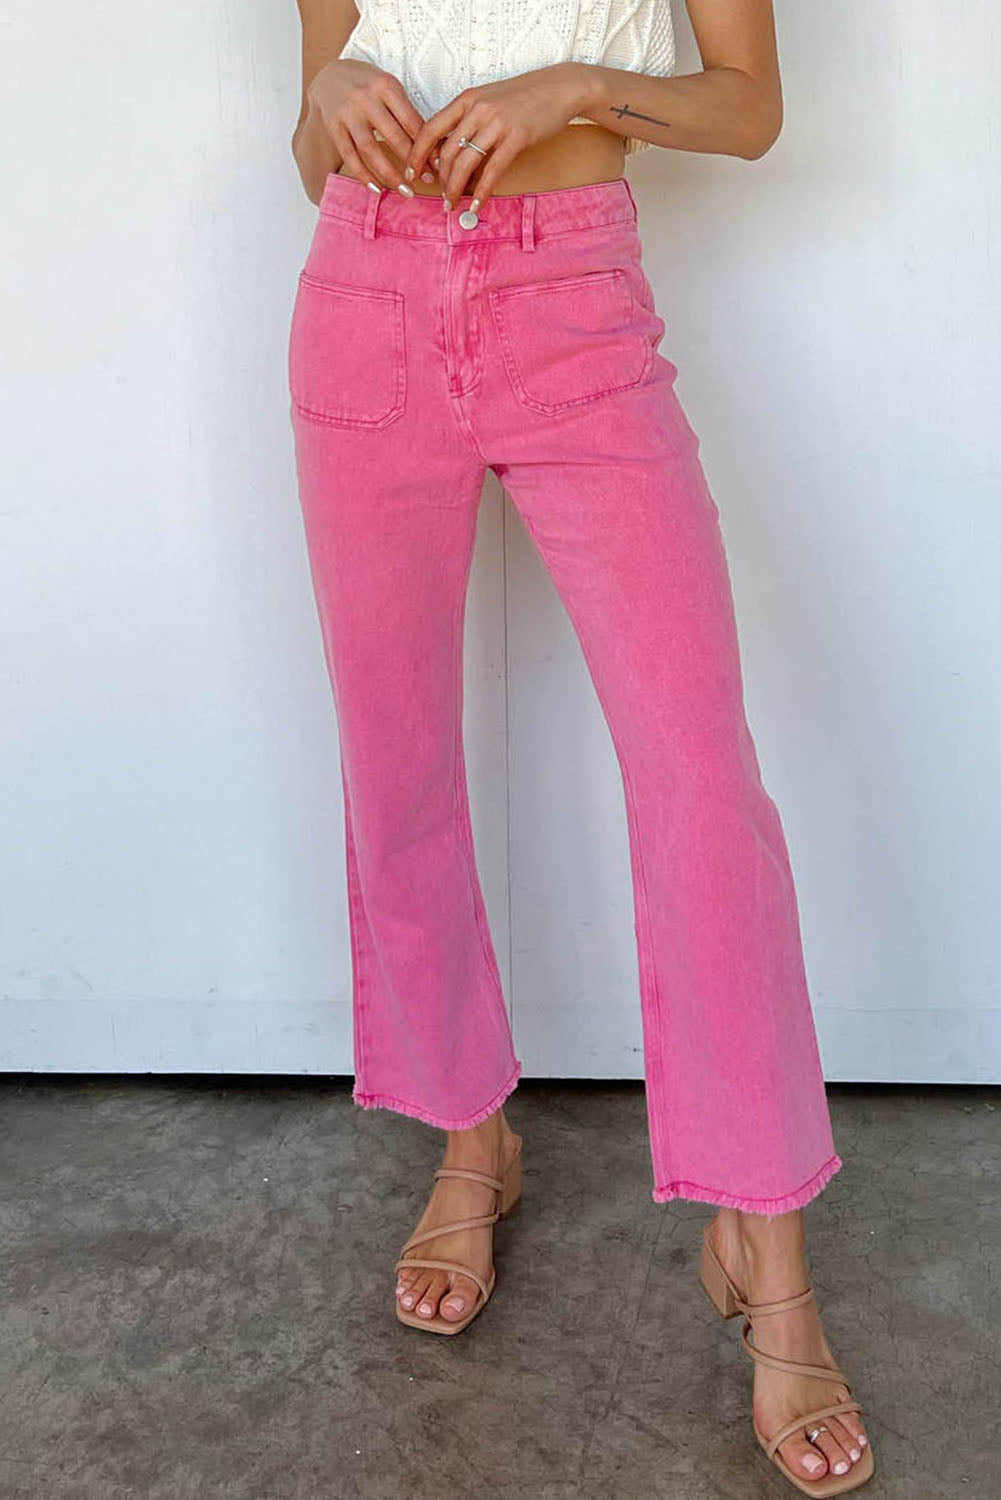 Barbie Style Pink Ankle-length Flare Leg Raw Hem Jeans Pink 98%Cotton+2%Elastane Jeans JT's Designer Fashion